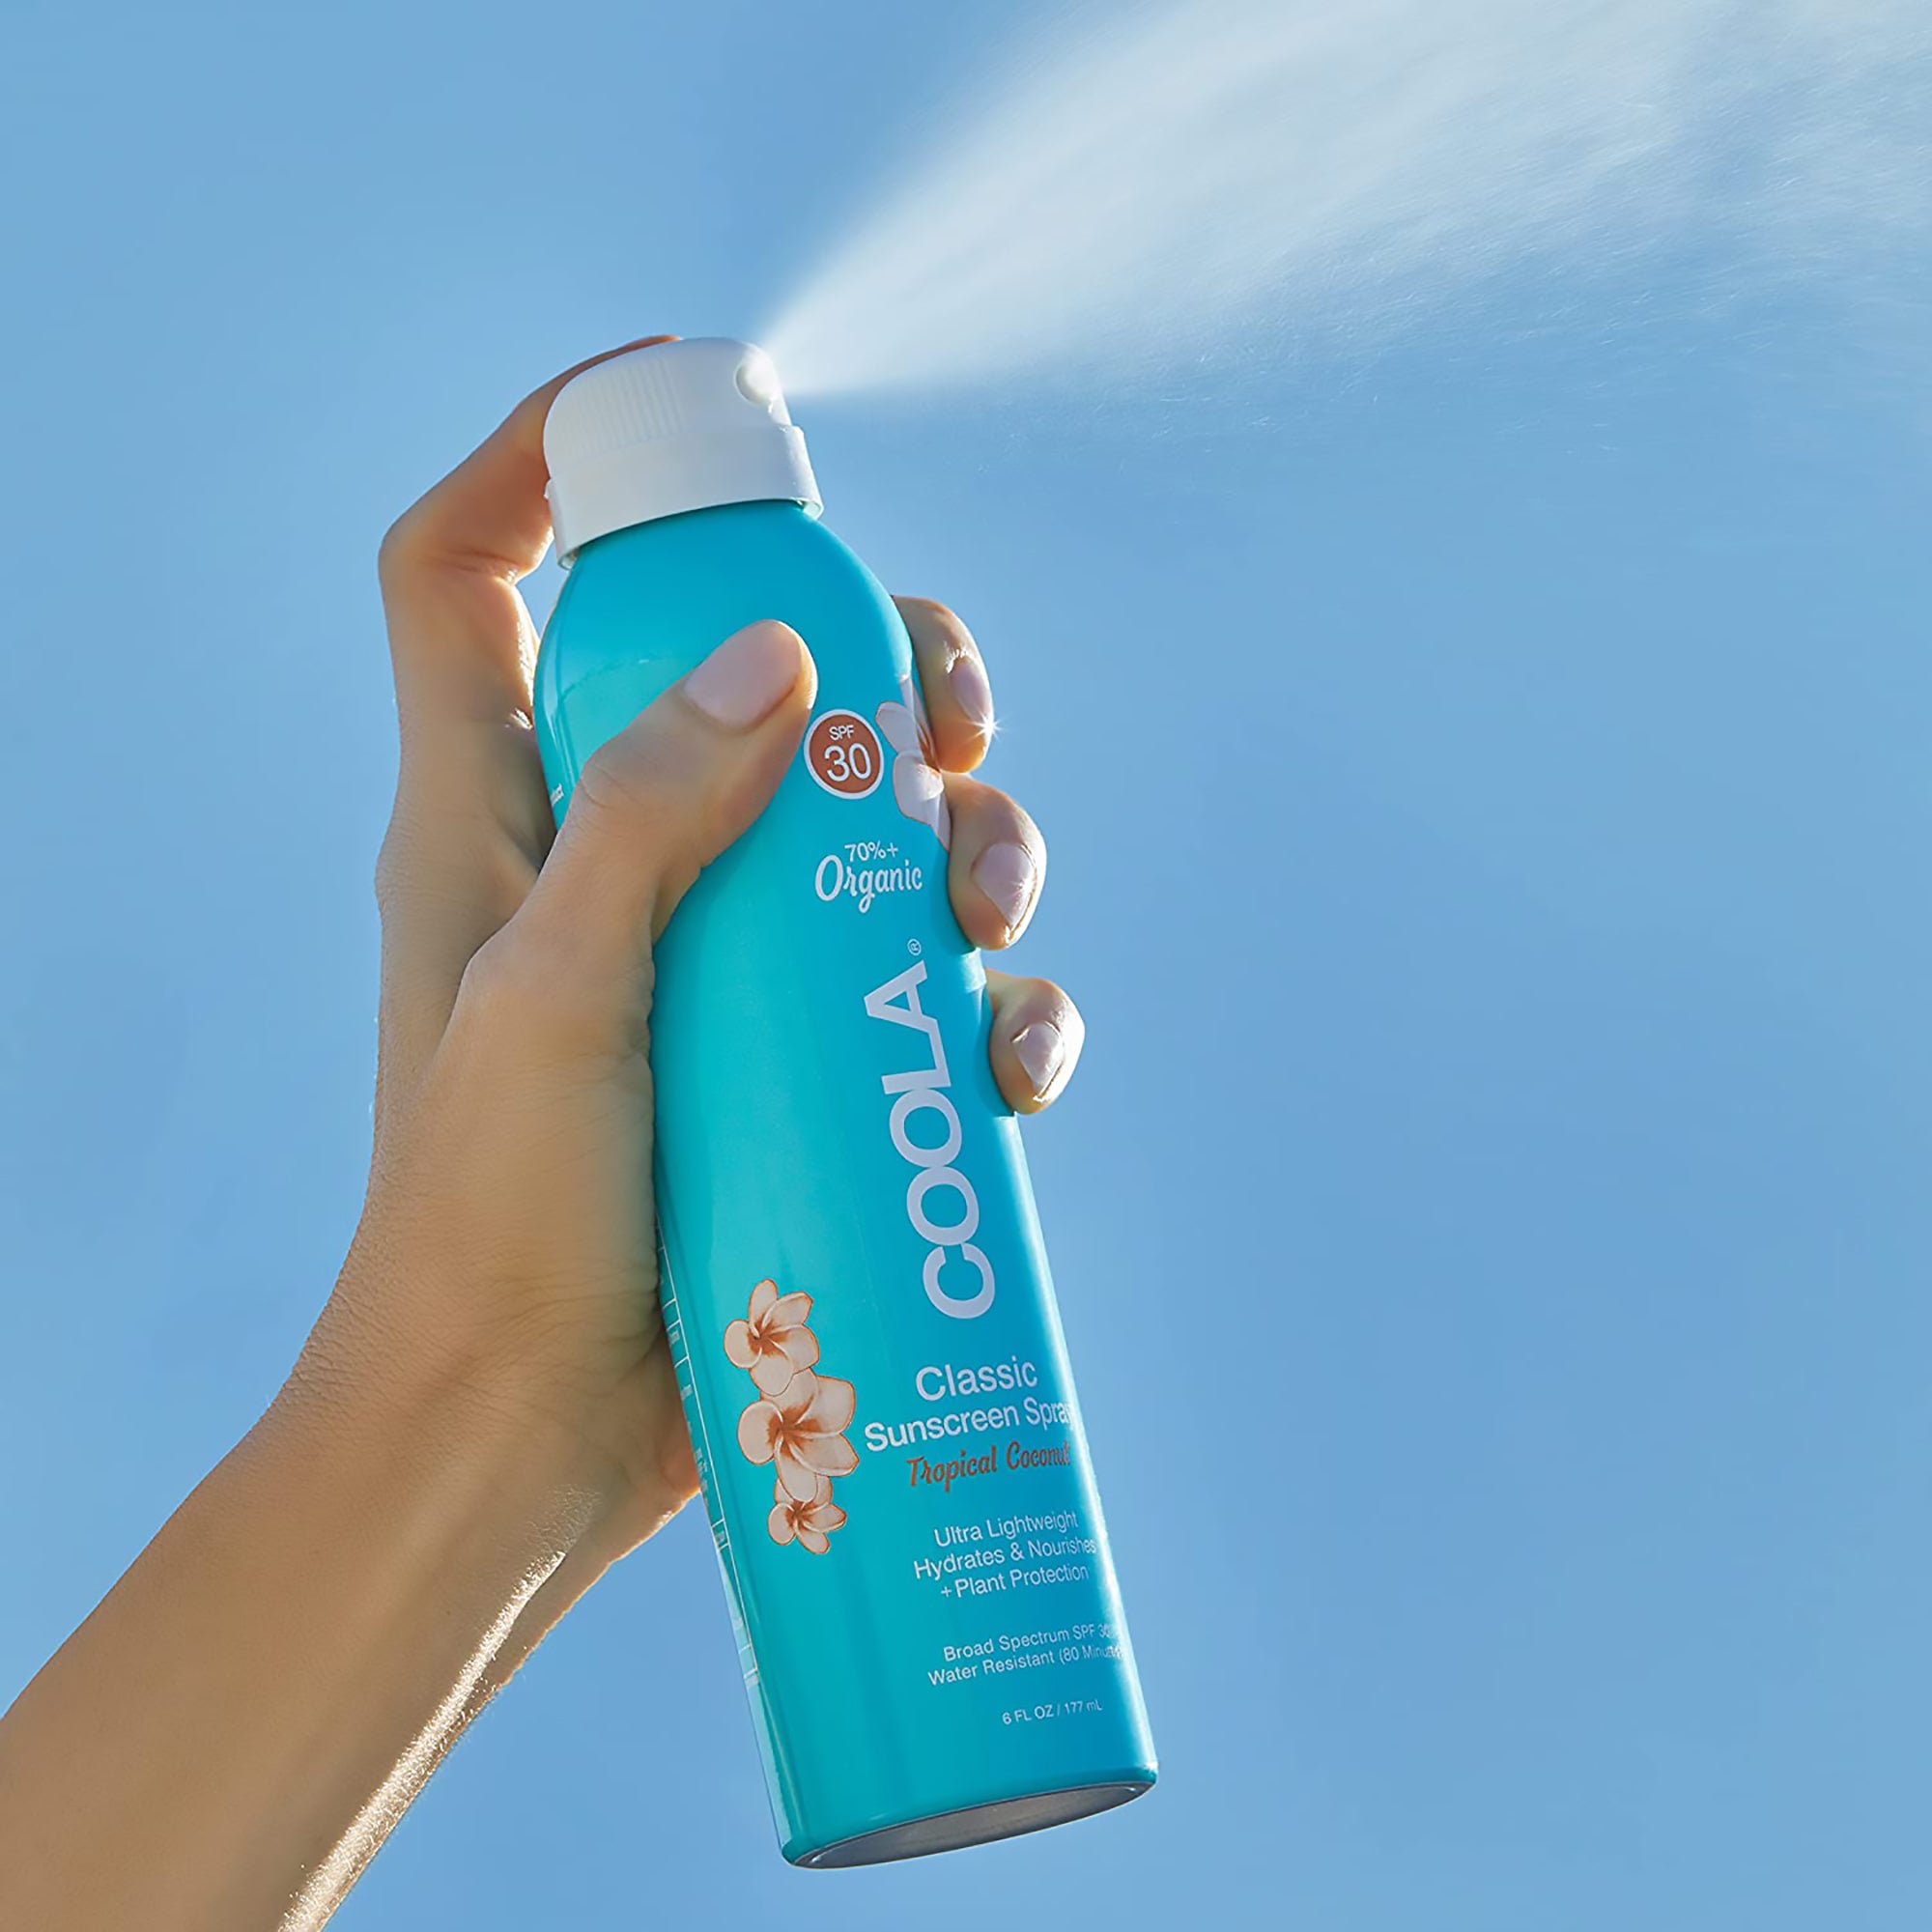 COOLA Suncare - Classic Body Organic Sunscreen Spray SPF 30 Tropical Coconut / TROPICAL COCONUT